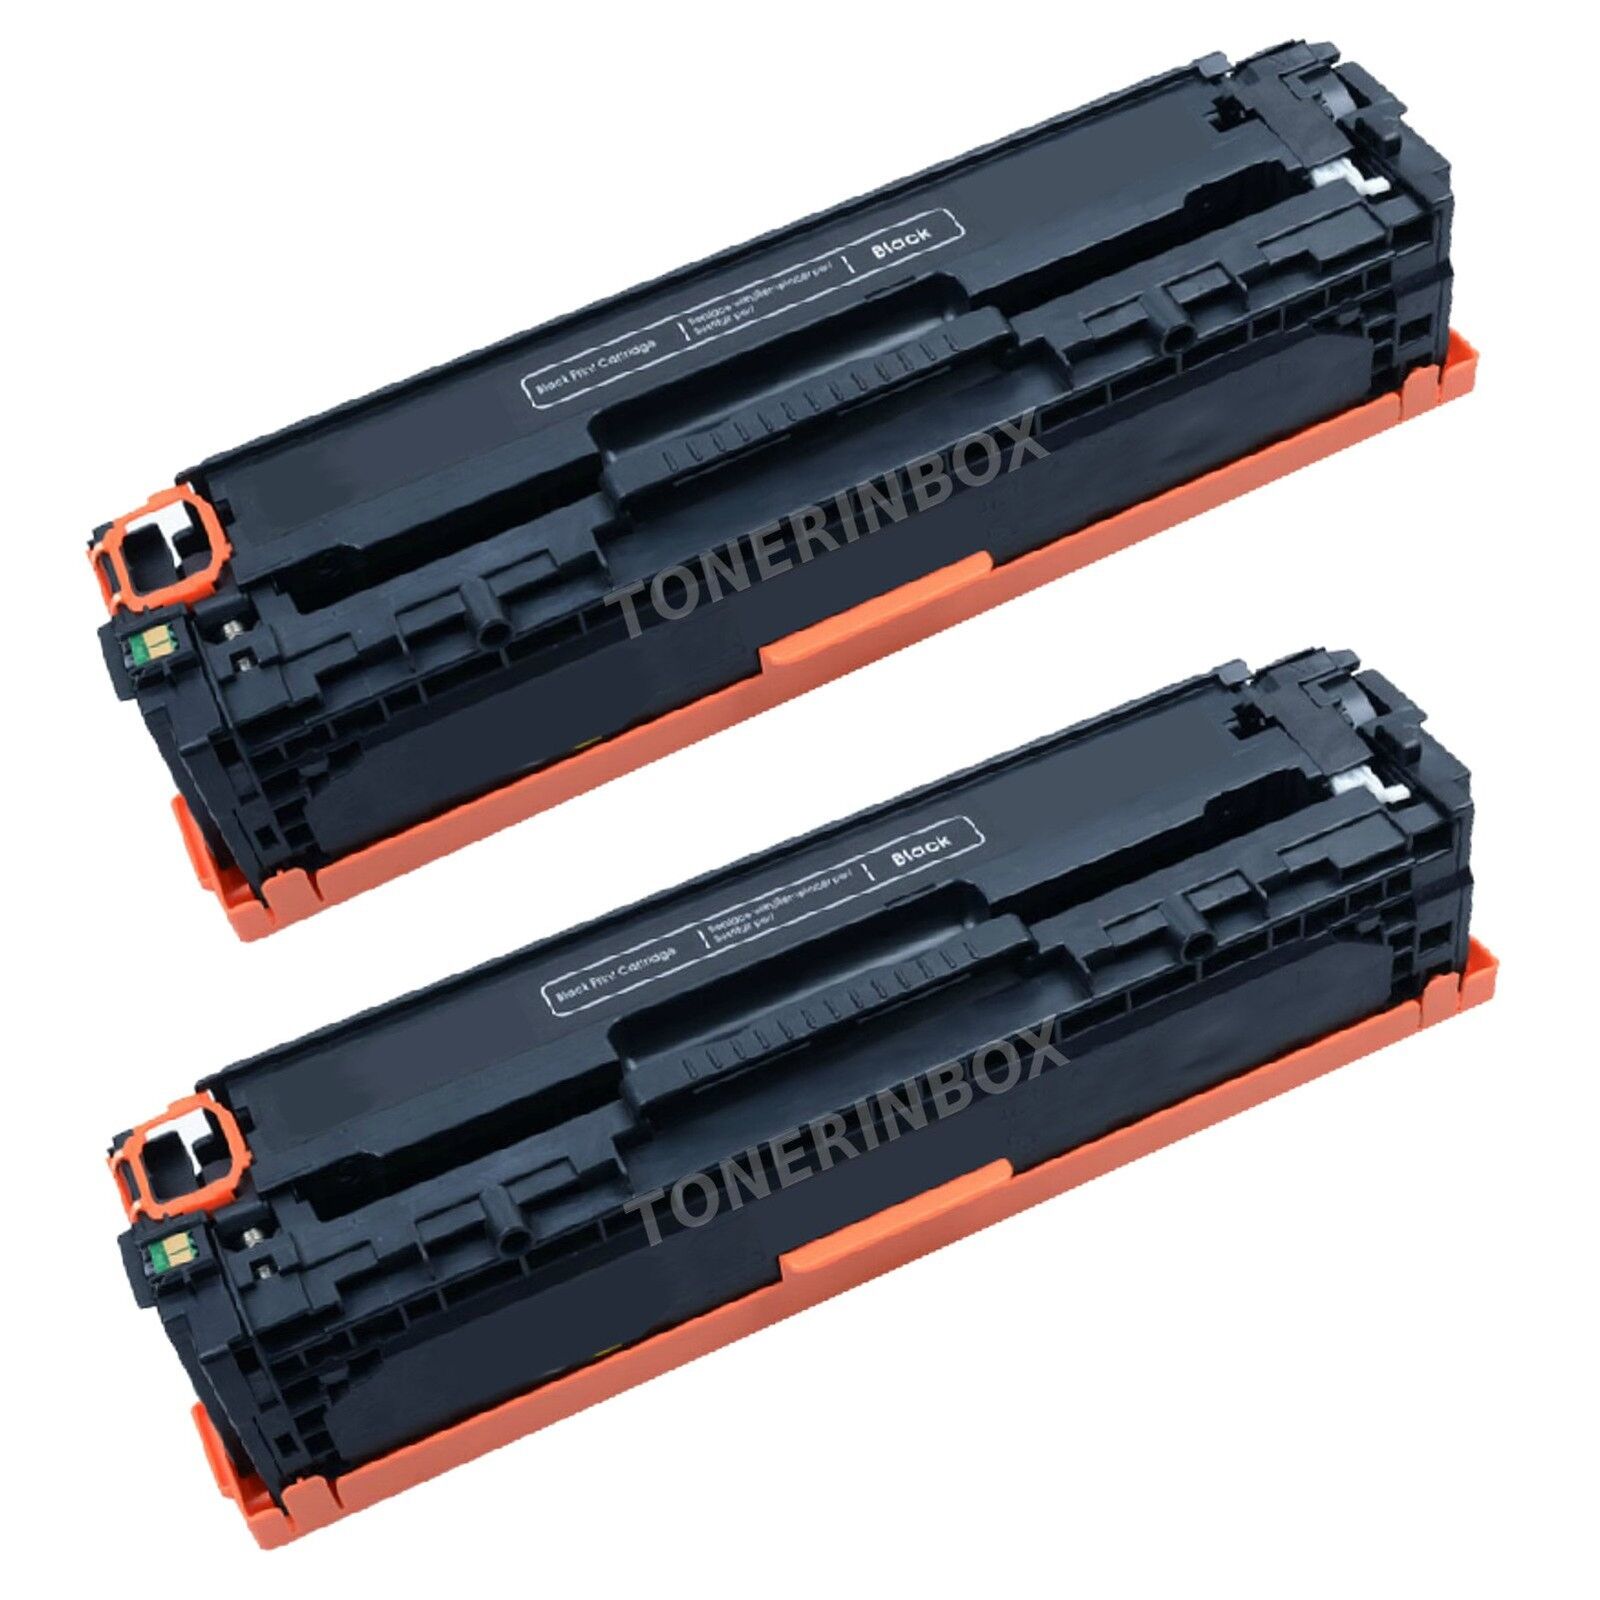 2pk Black Compatible Toner Cartridge for HP CF210A 131A Black M251nw M276n M276n